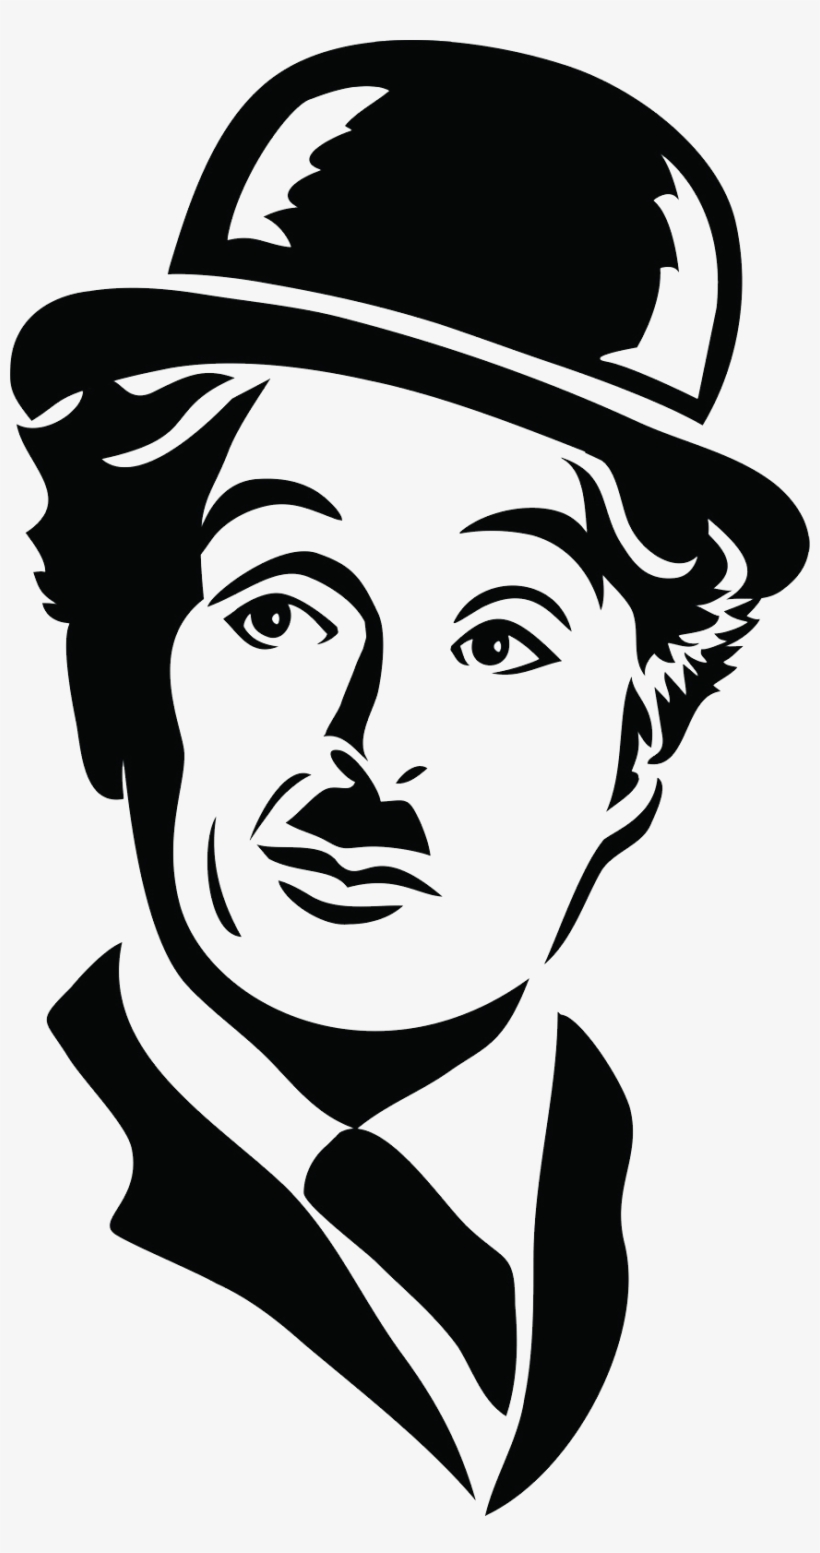 Charlie Chaplin Png Image - Charlie Chaplin, transparent png #596366